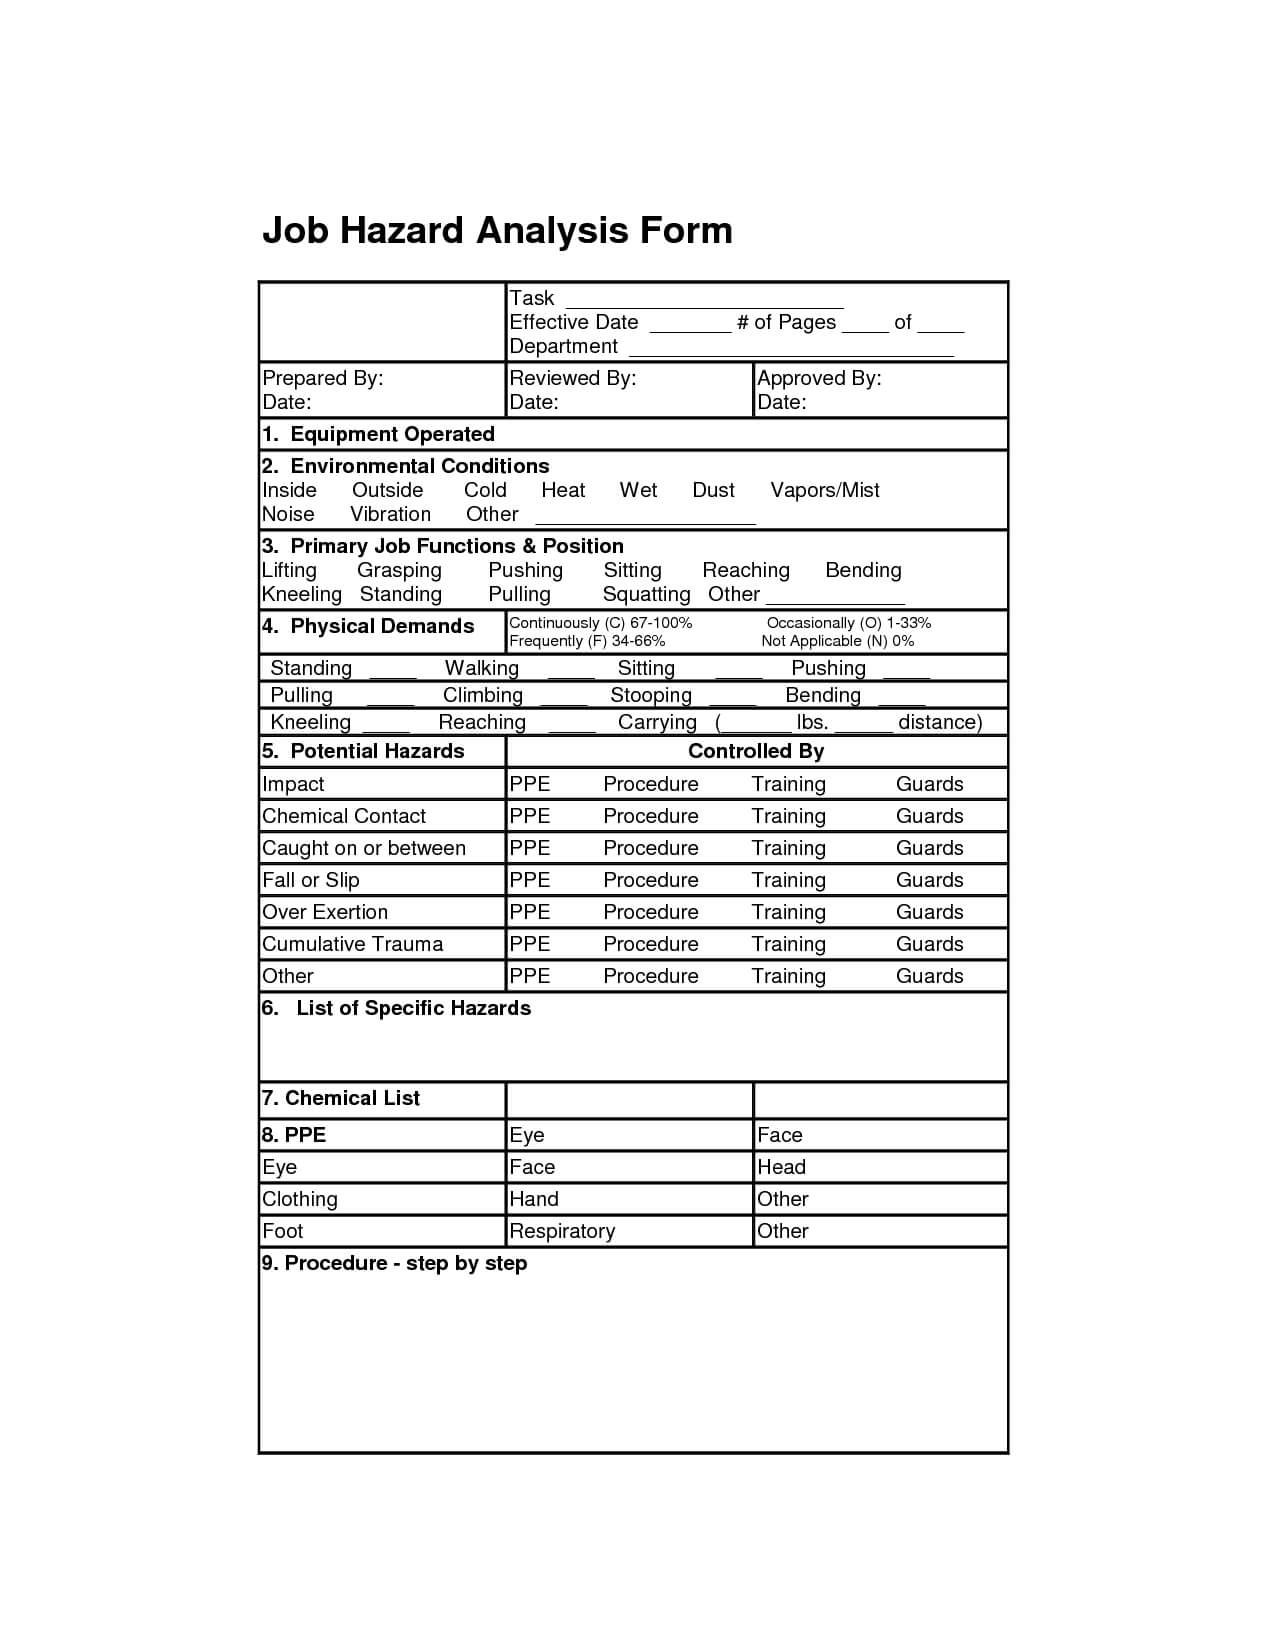 Job Hazard Analysis Form | Job Analysis Forms | Job Analysis Throughout Safety Analysis Report Template